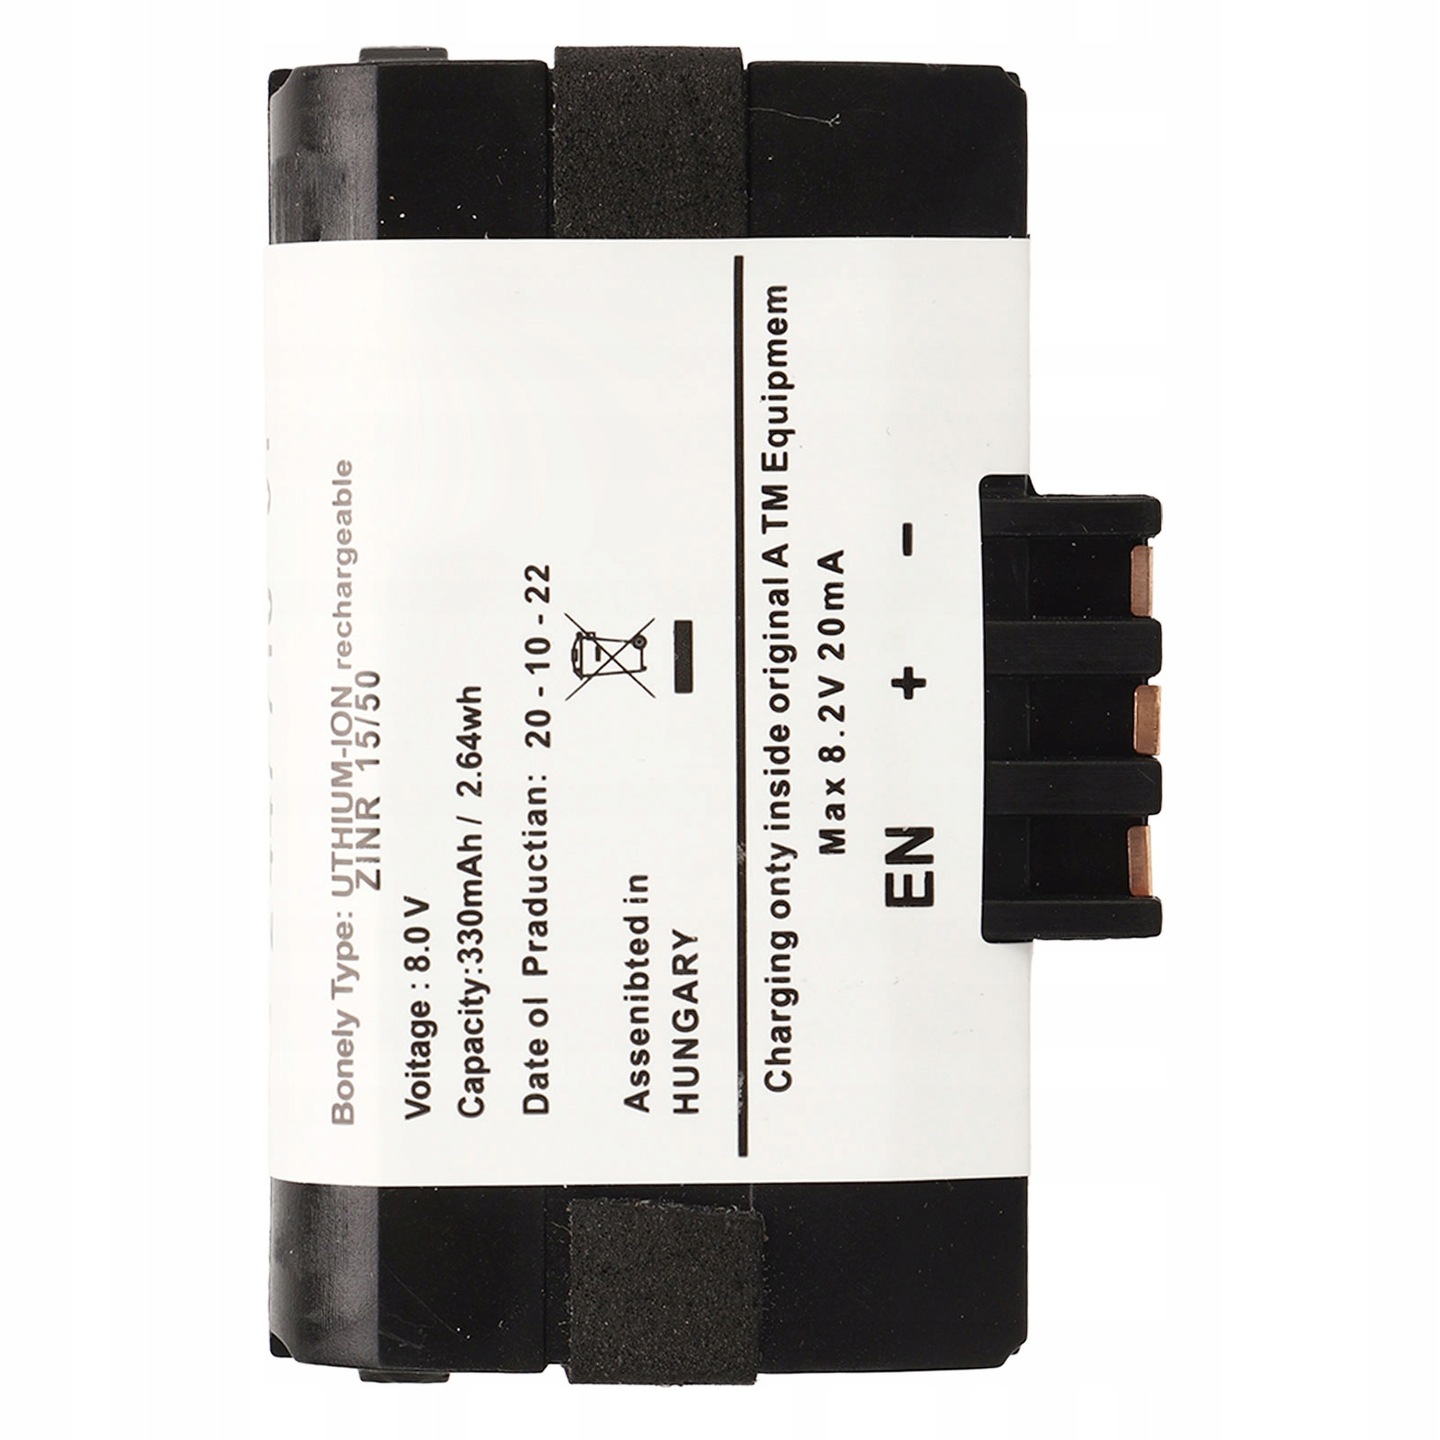 Battery akcel 12v 72ah 680a p - Online catalog ❱ XDALYS